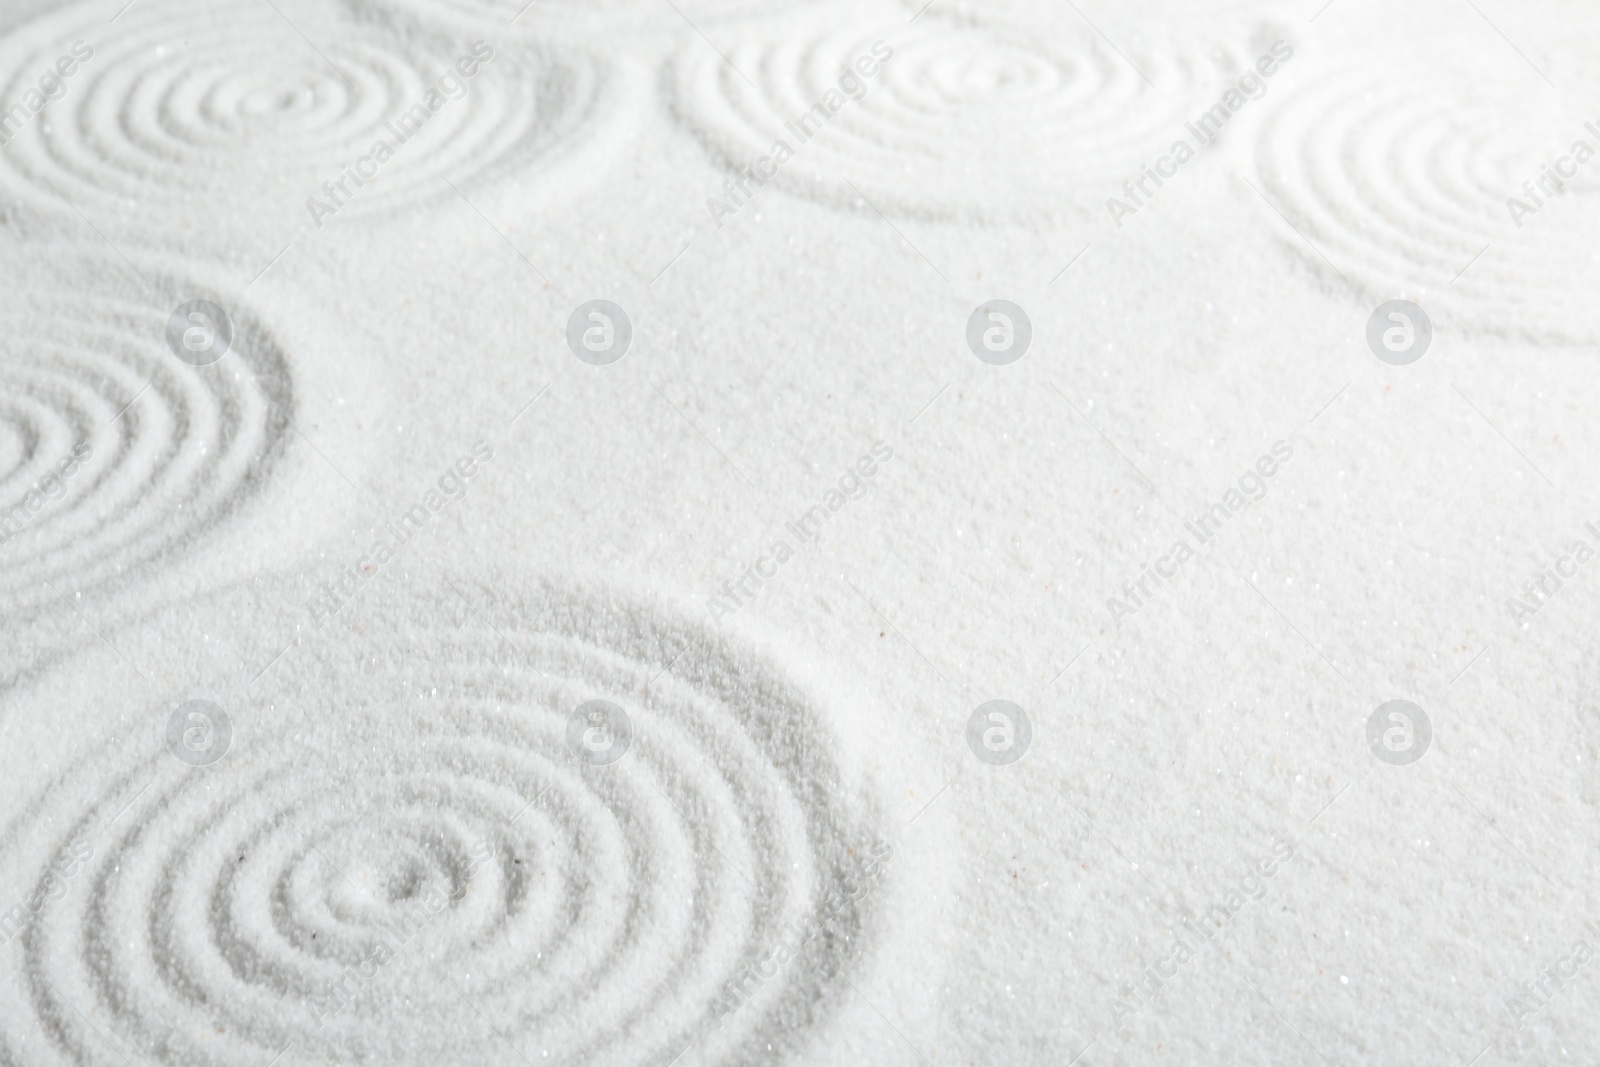 Photo of Zen rock garden. Circle patterns on white sand